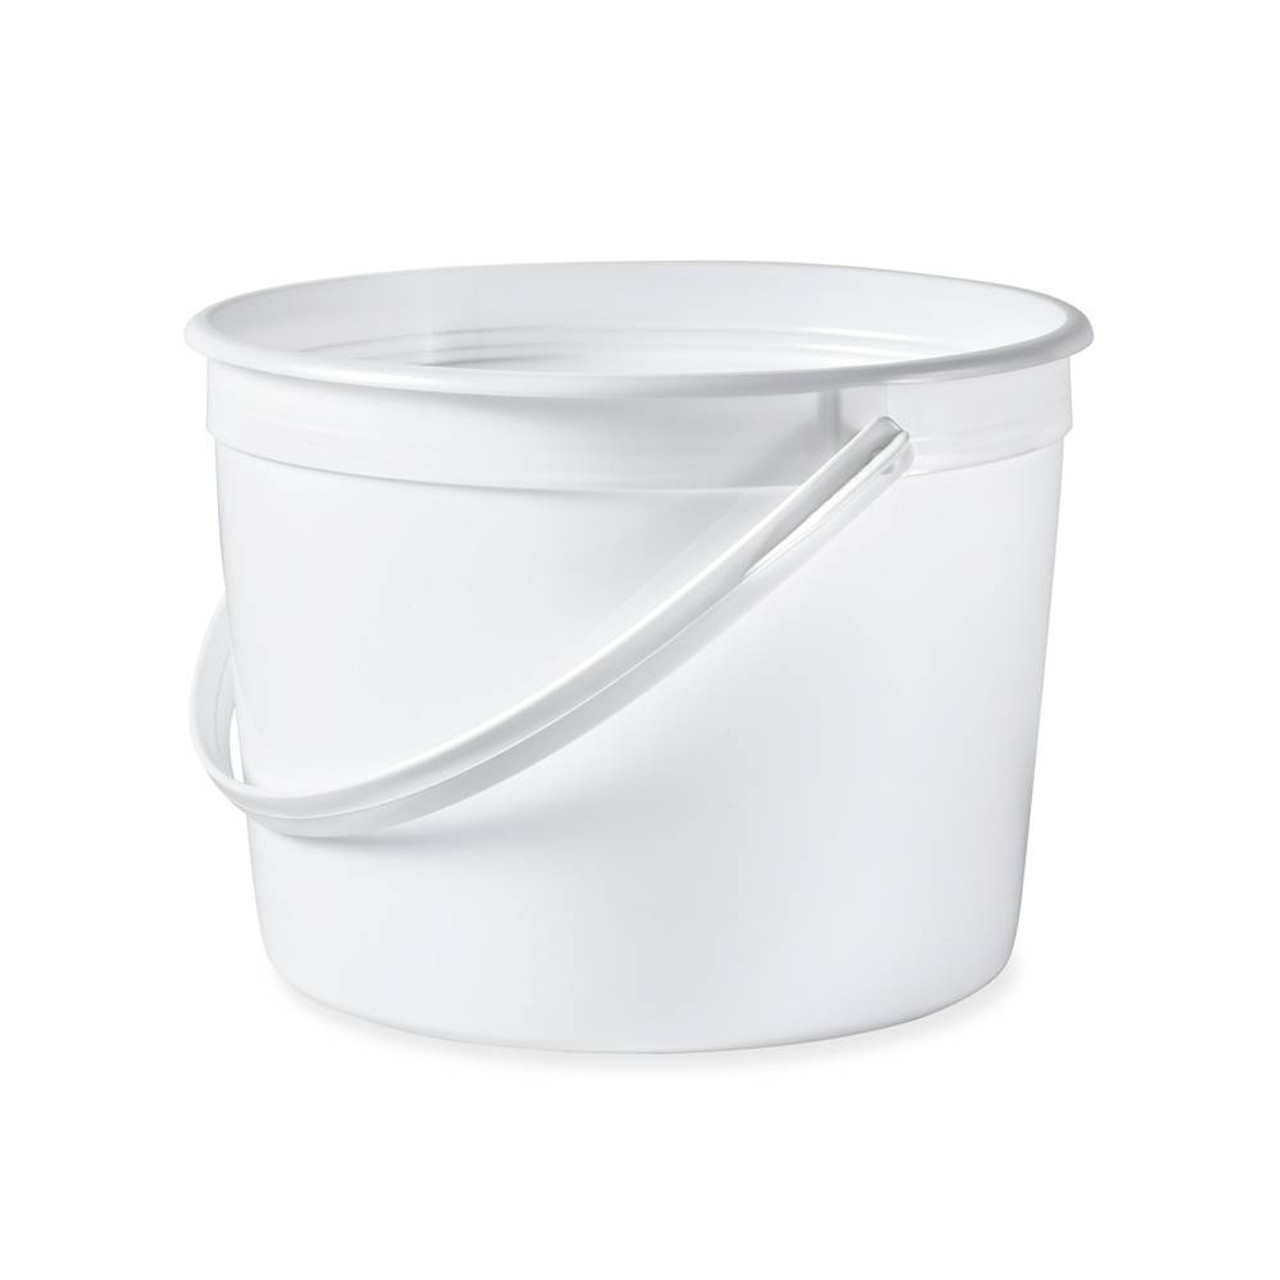 2.5L Green Plastic buckets With Lid - H&O Plastics